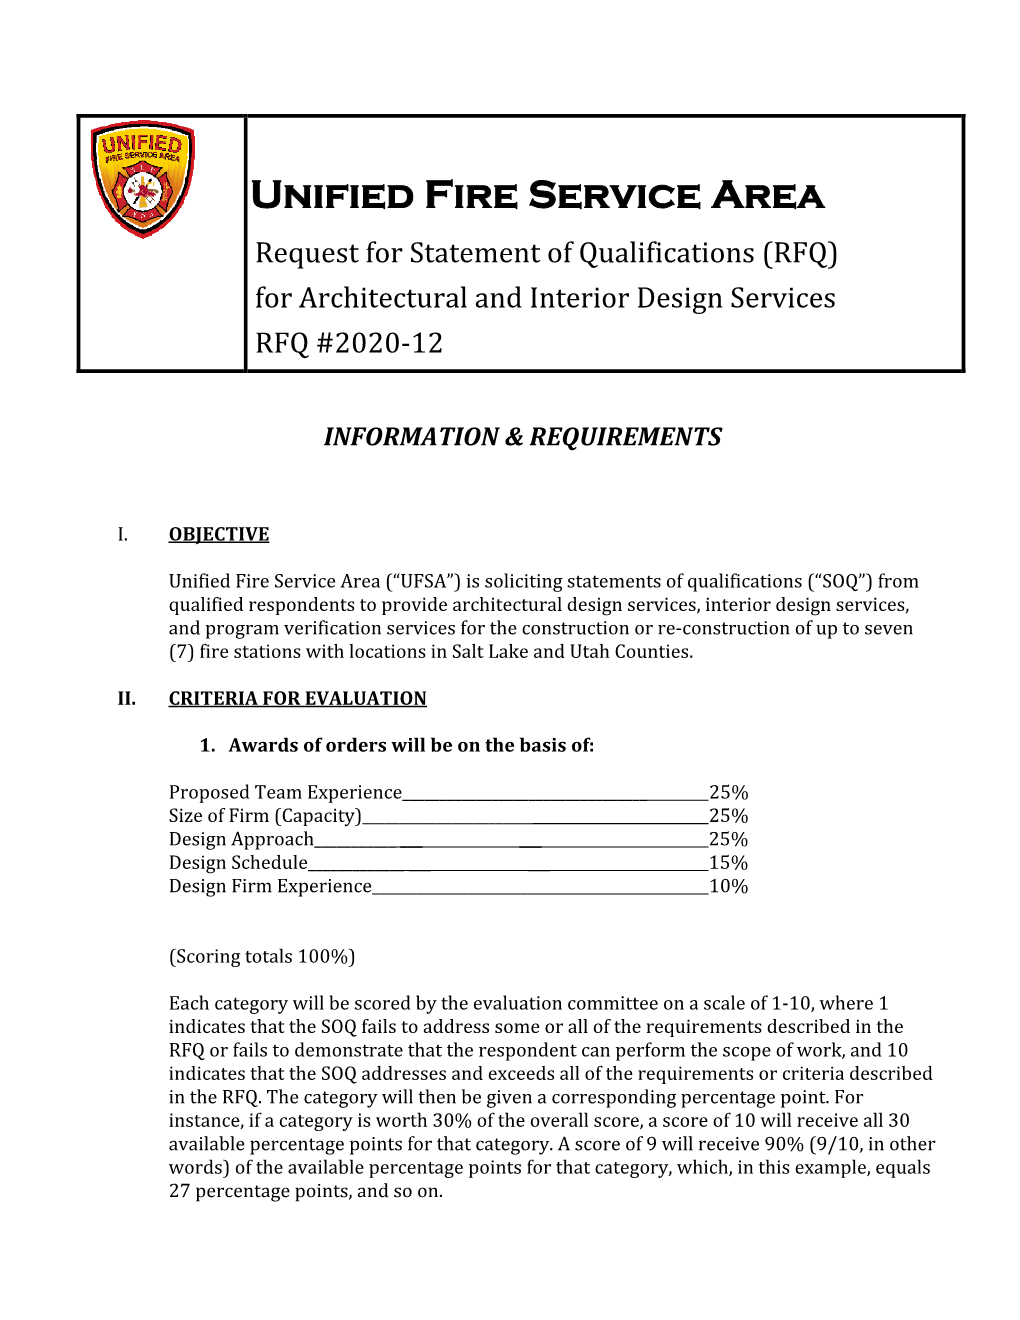 Unified Fire Service Area